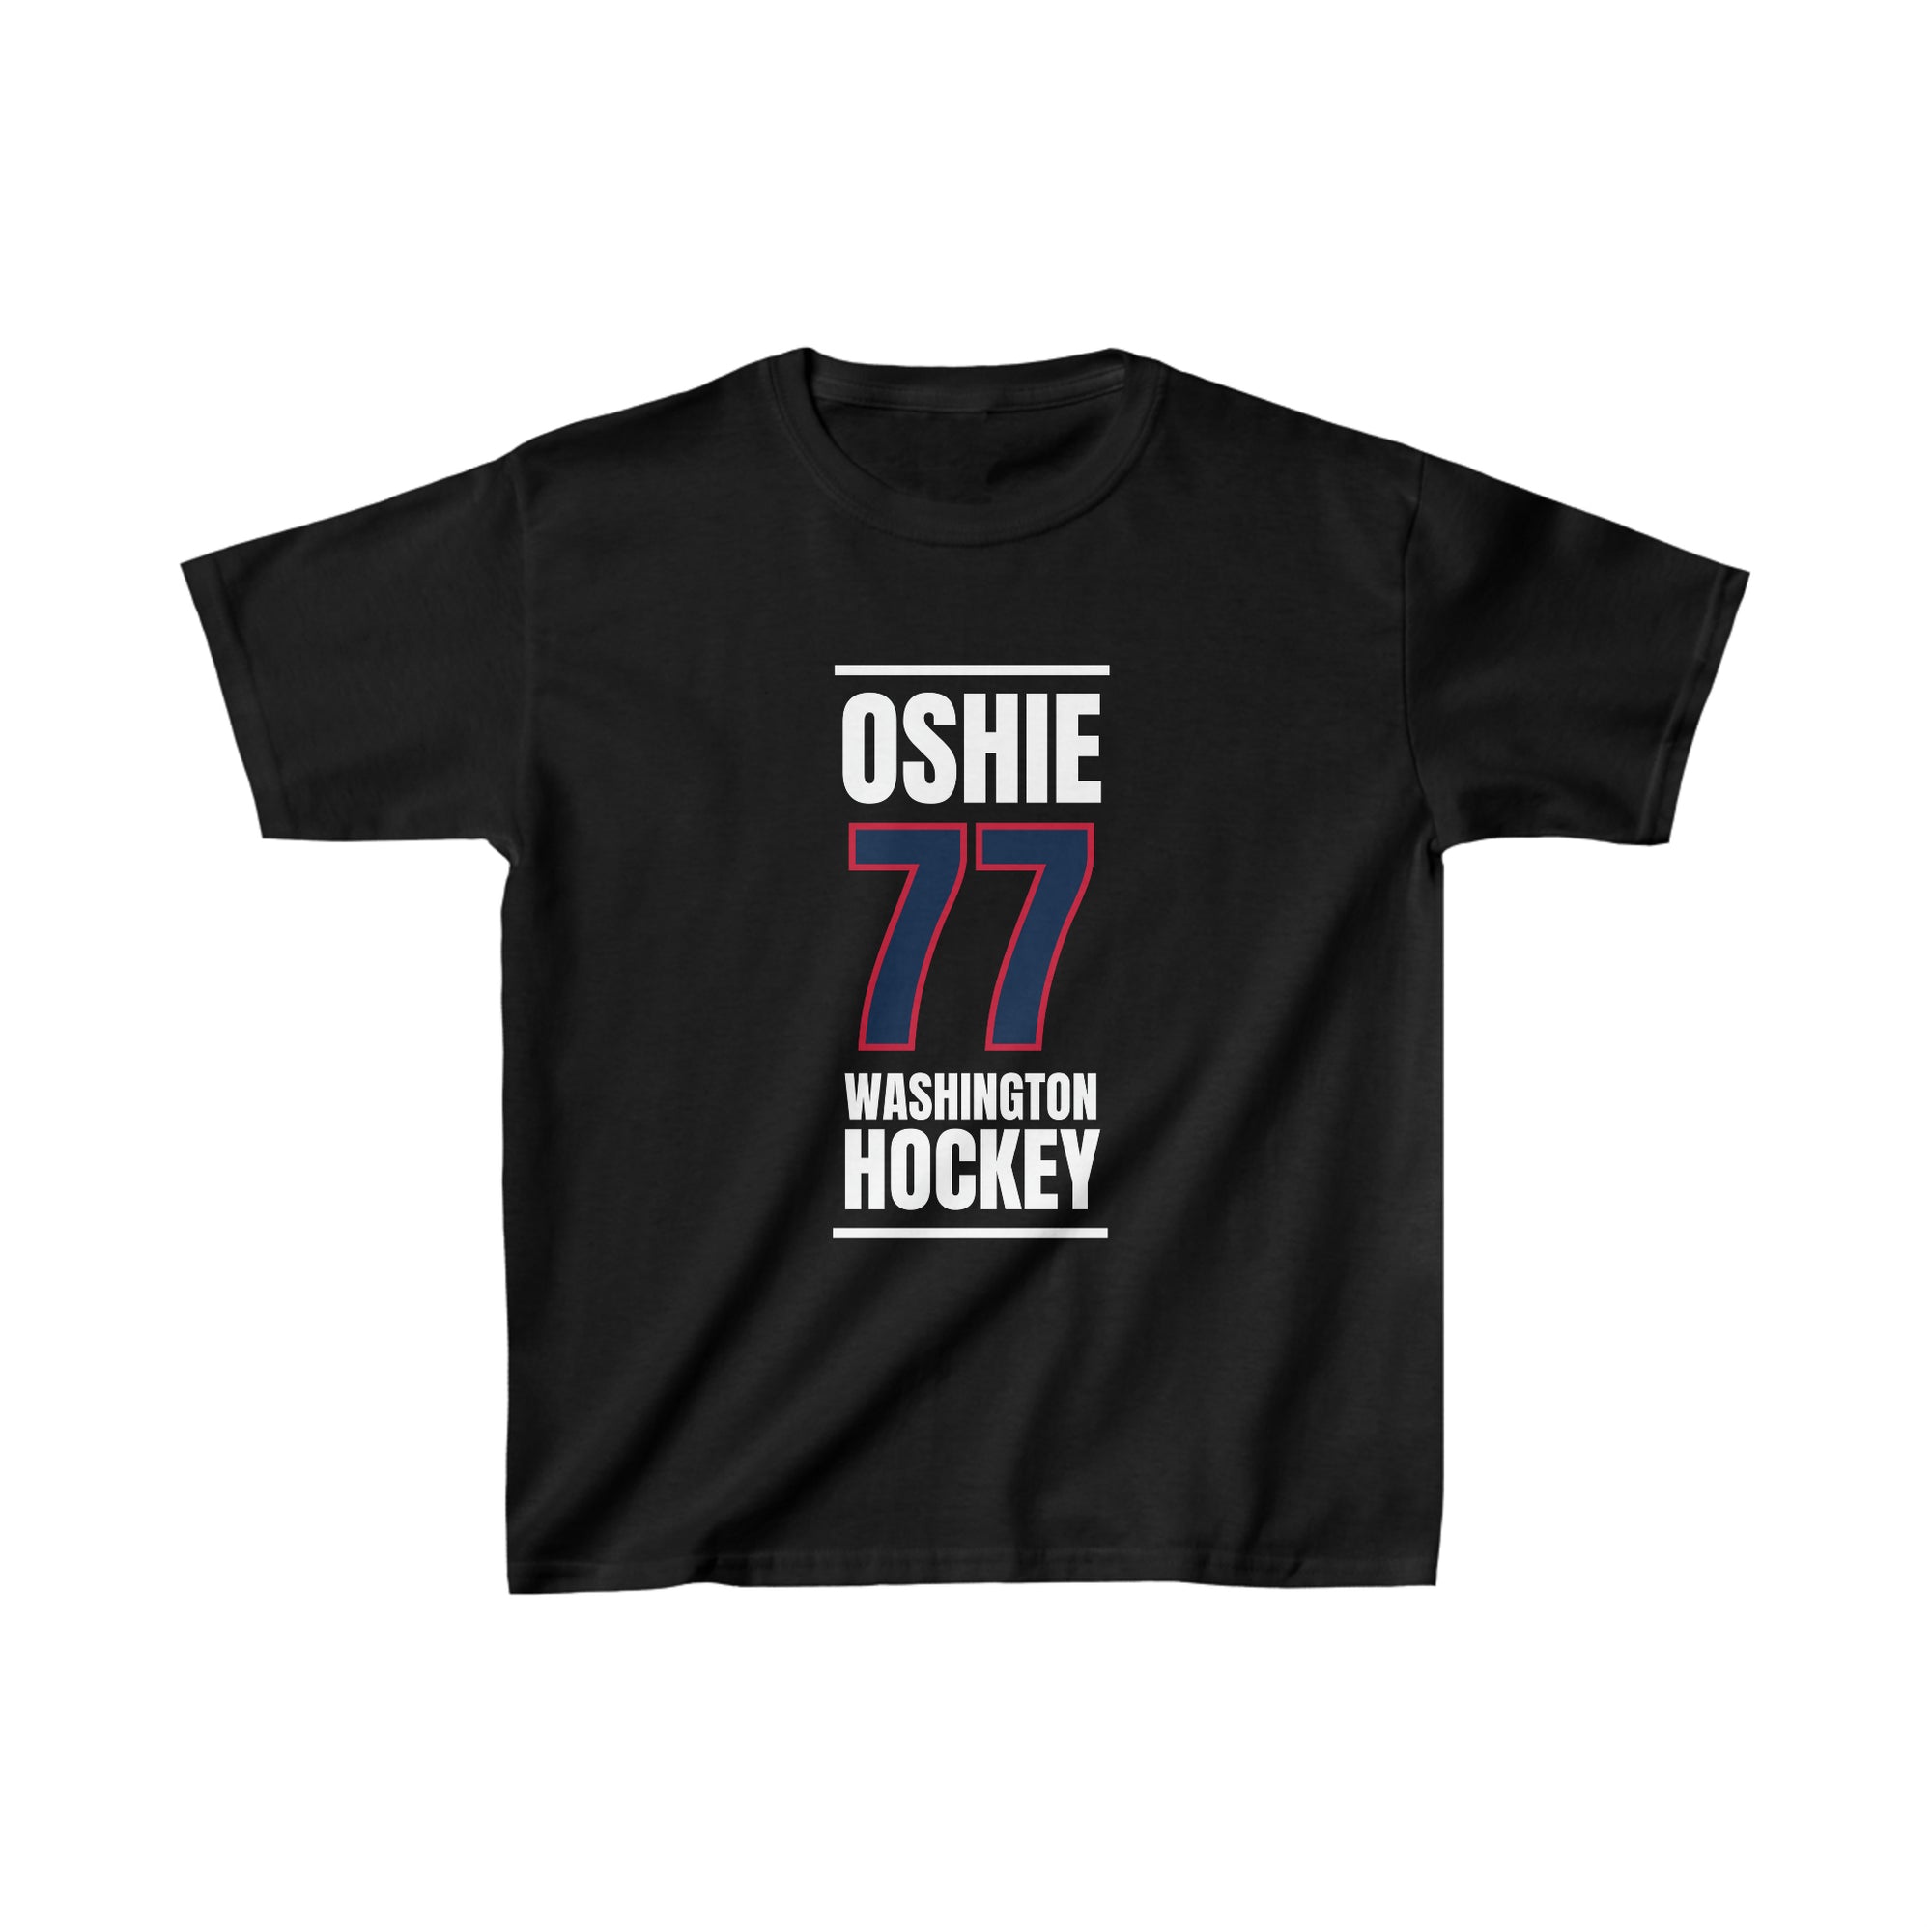 Oshie 77 Washington Hockey Navy Vertical Design Kids Tee